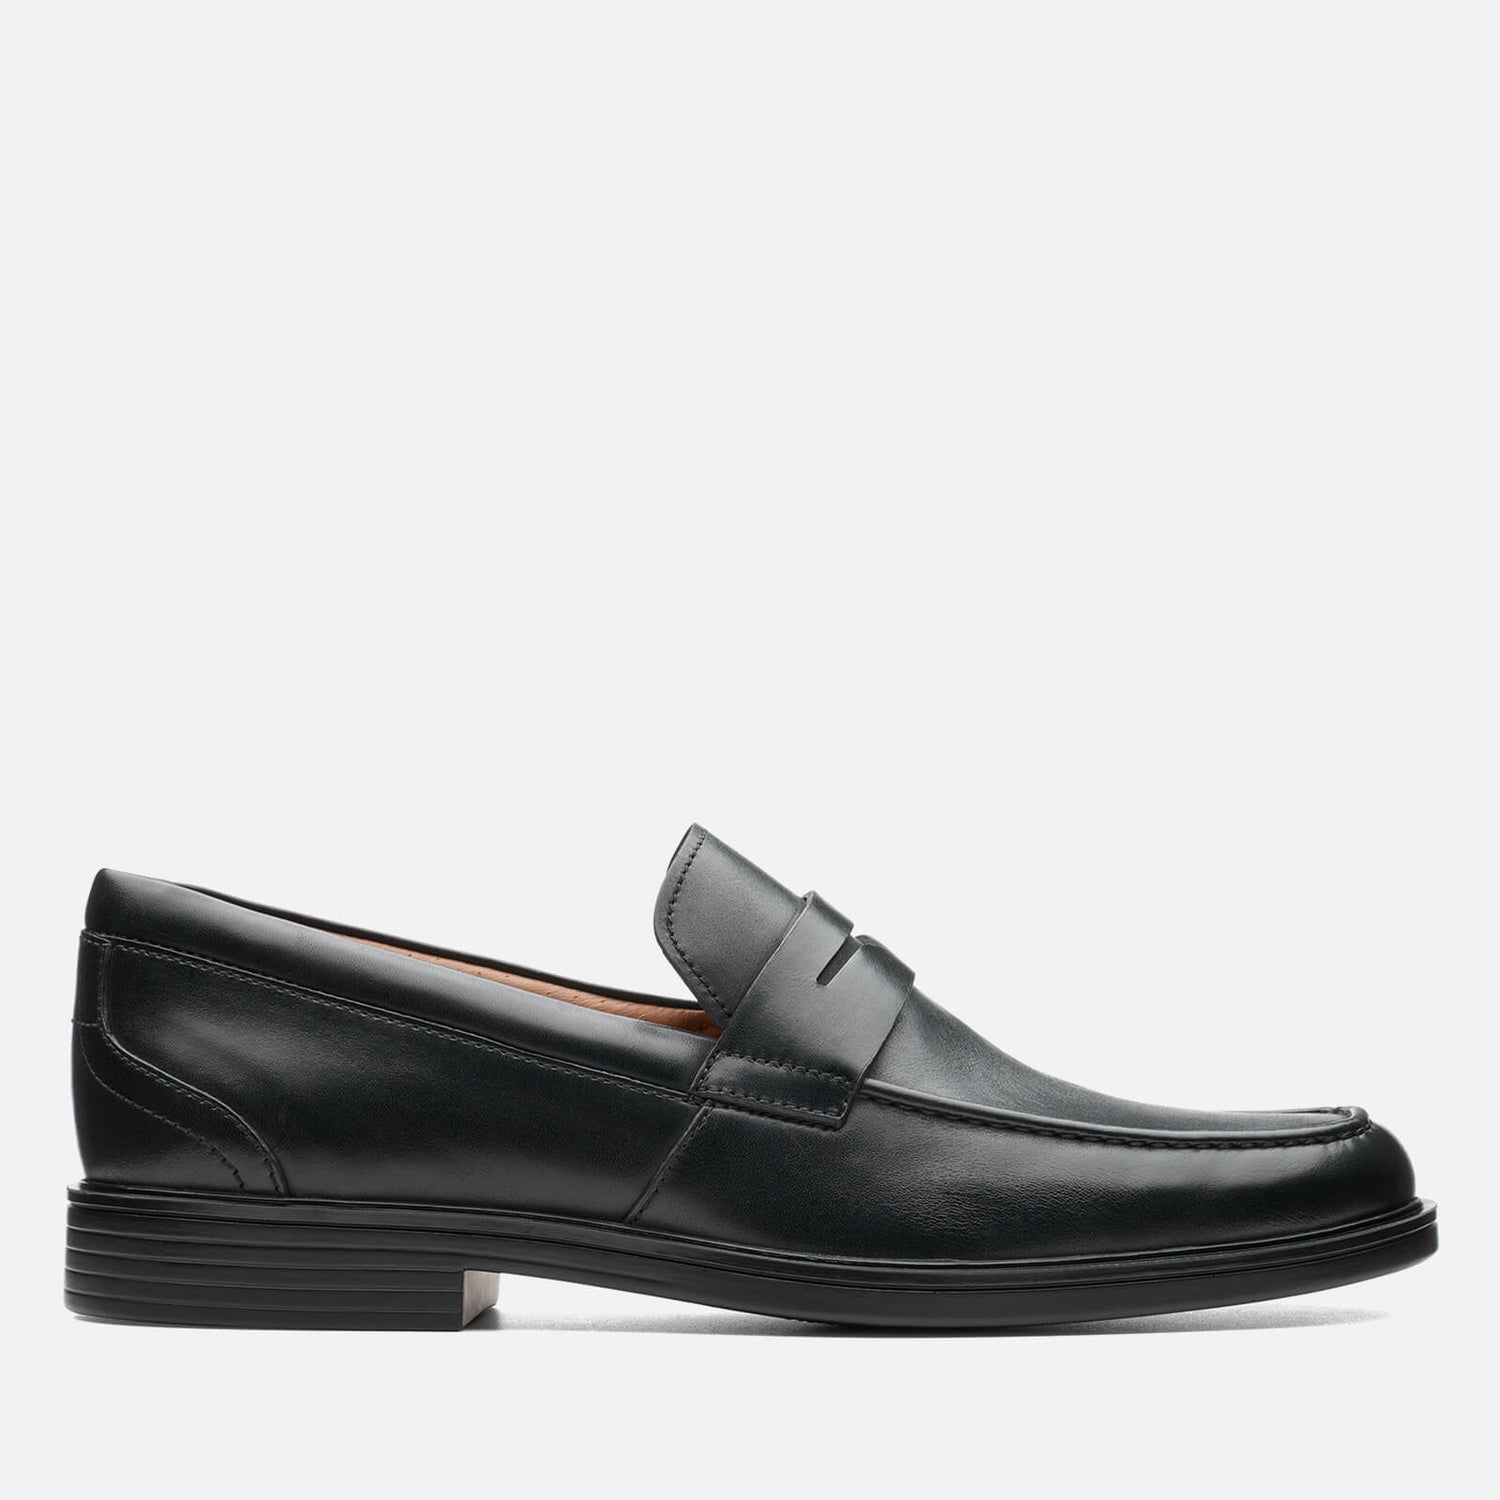 Clarks Men's Un Aldric Step Leather Loafers - Black